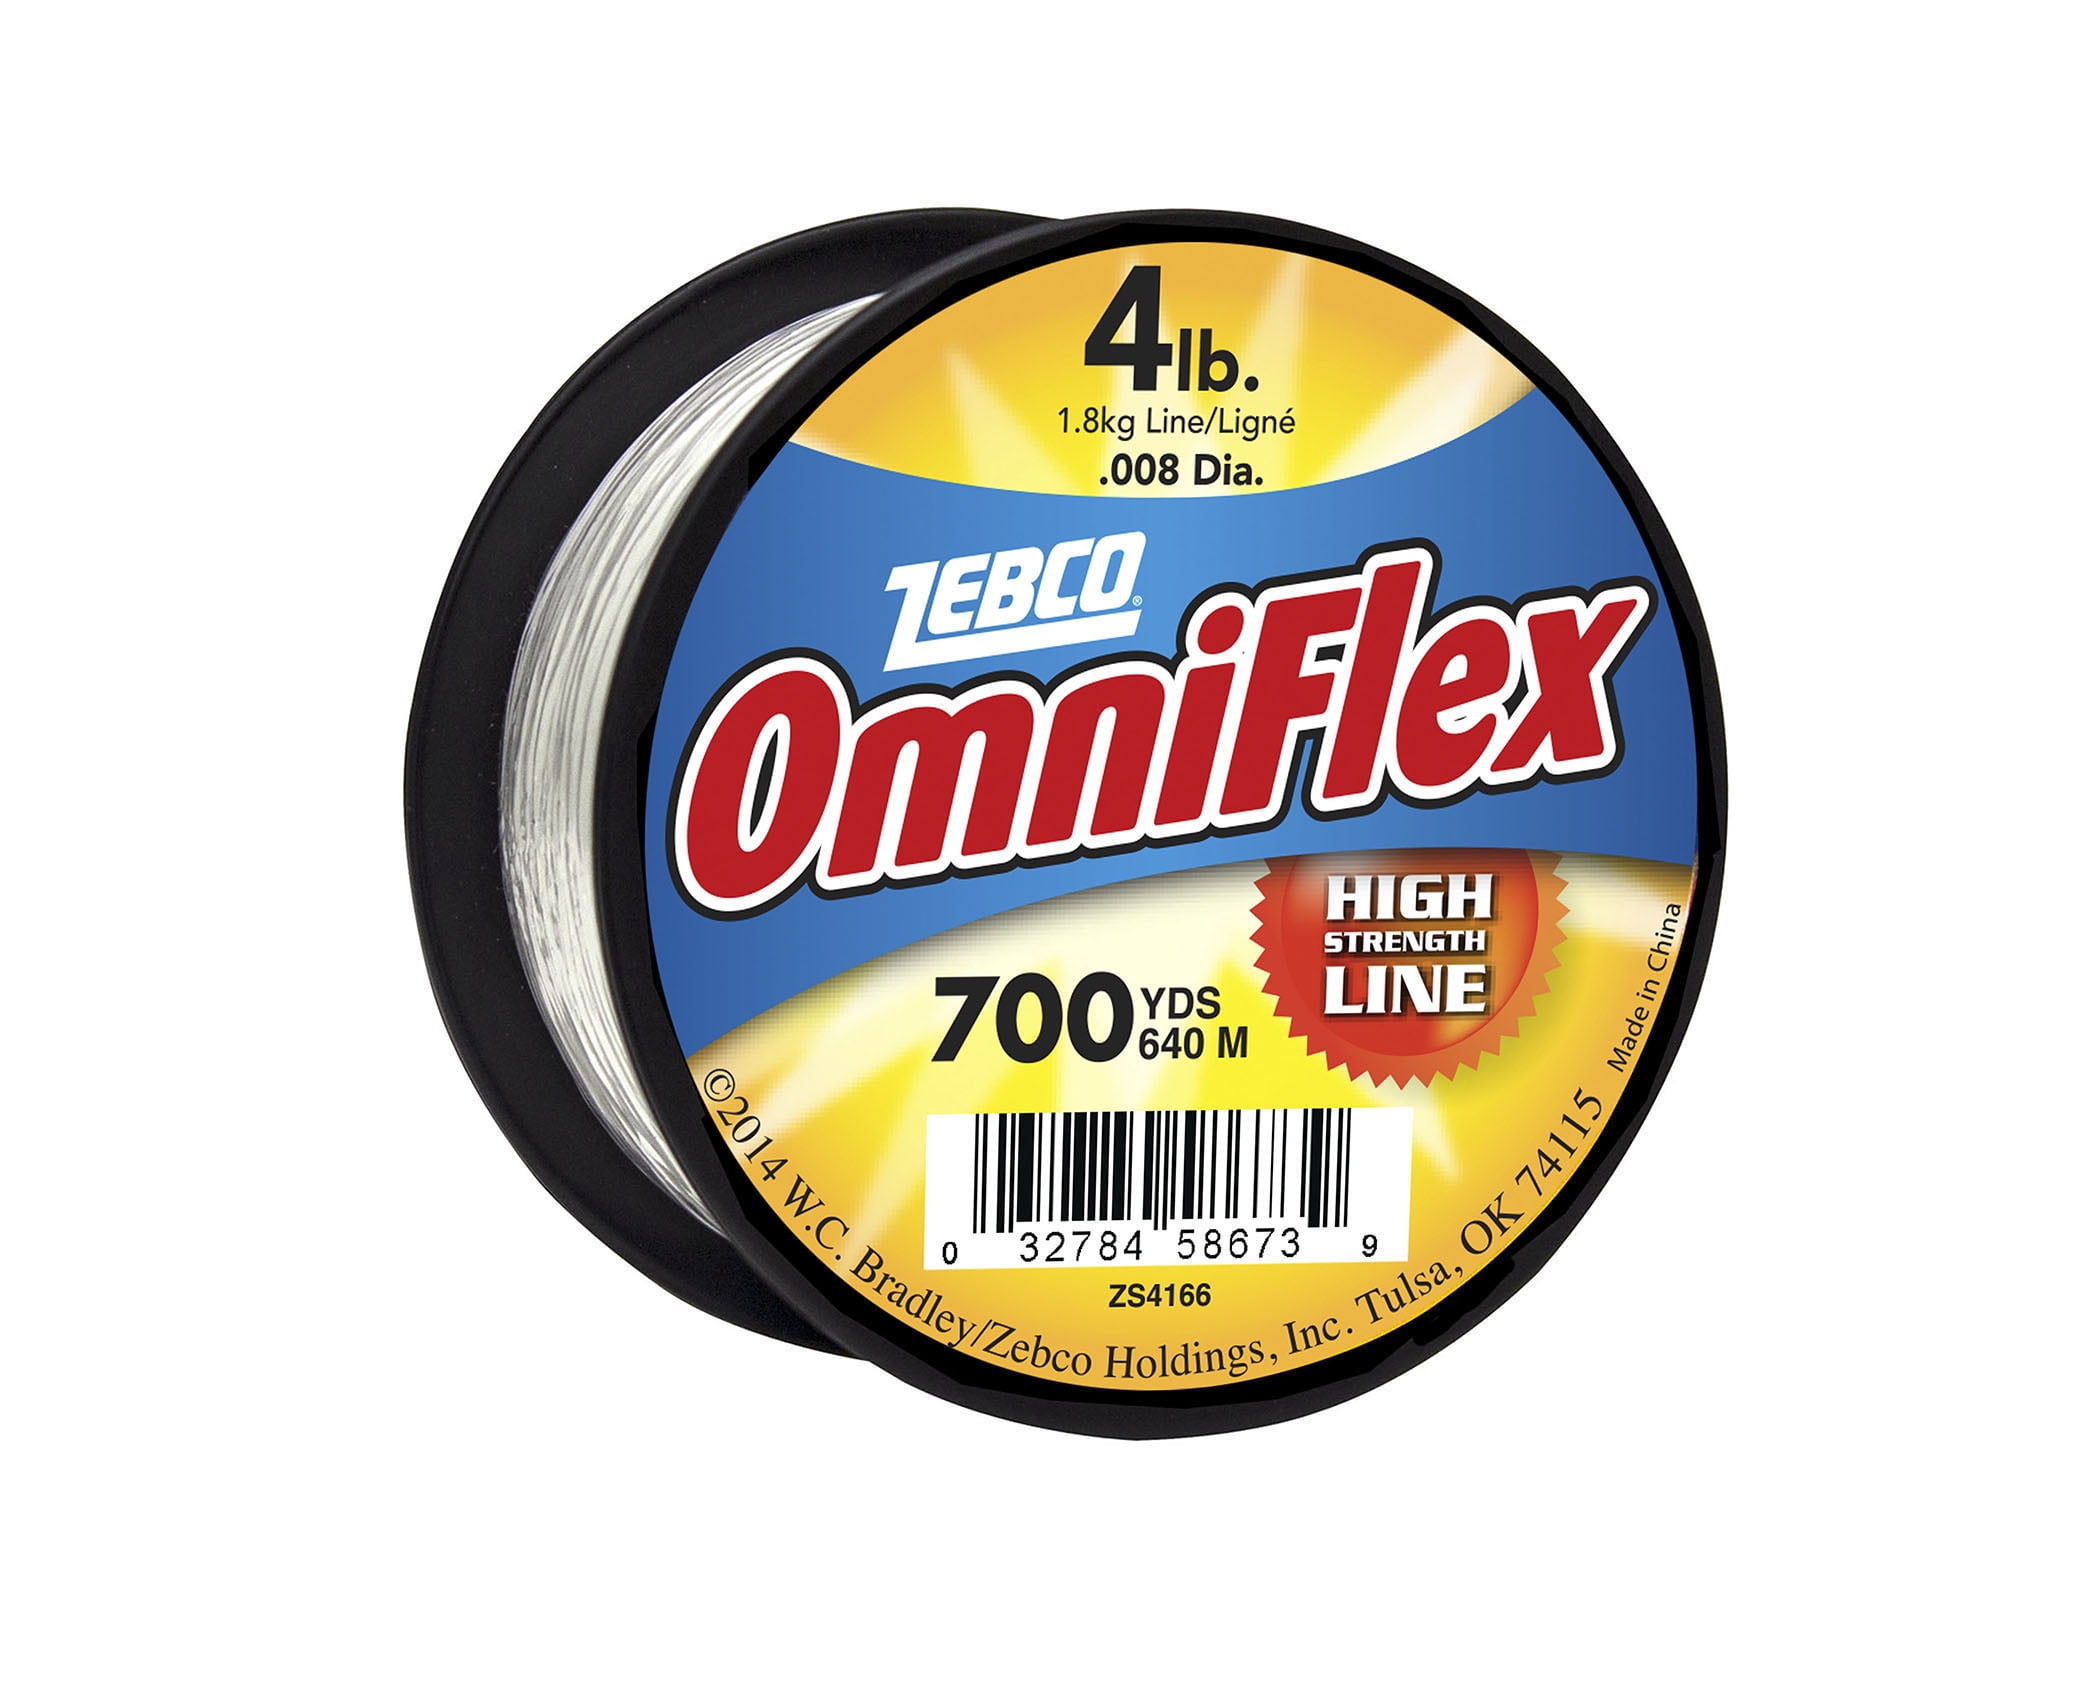 Zebco Omniflex Monofilament Fishing Line - 4 lb